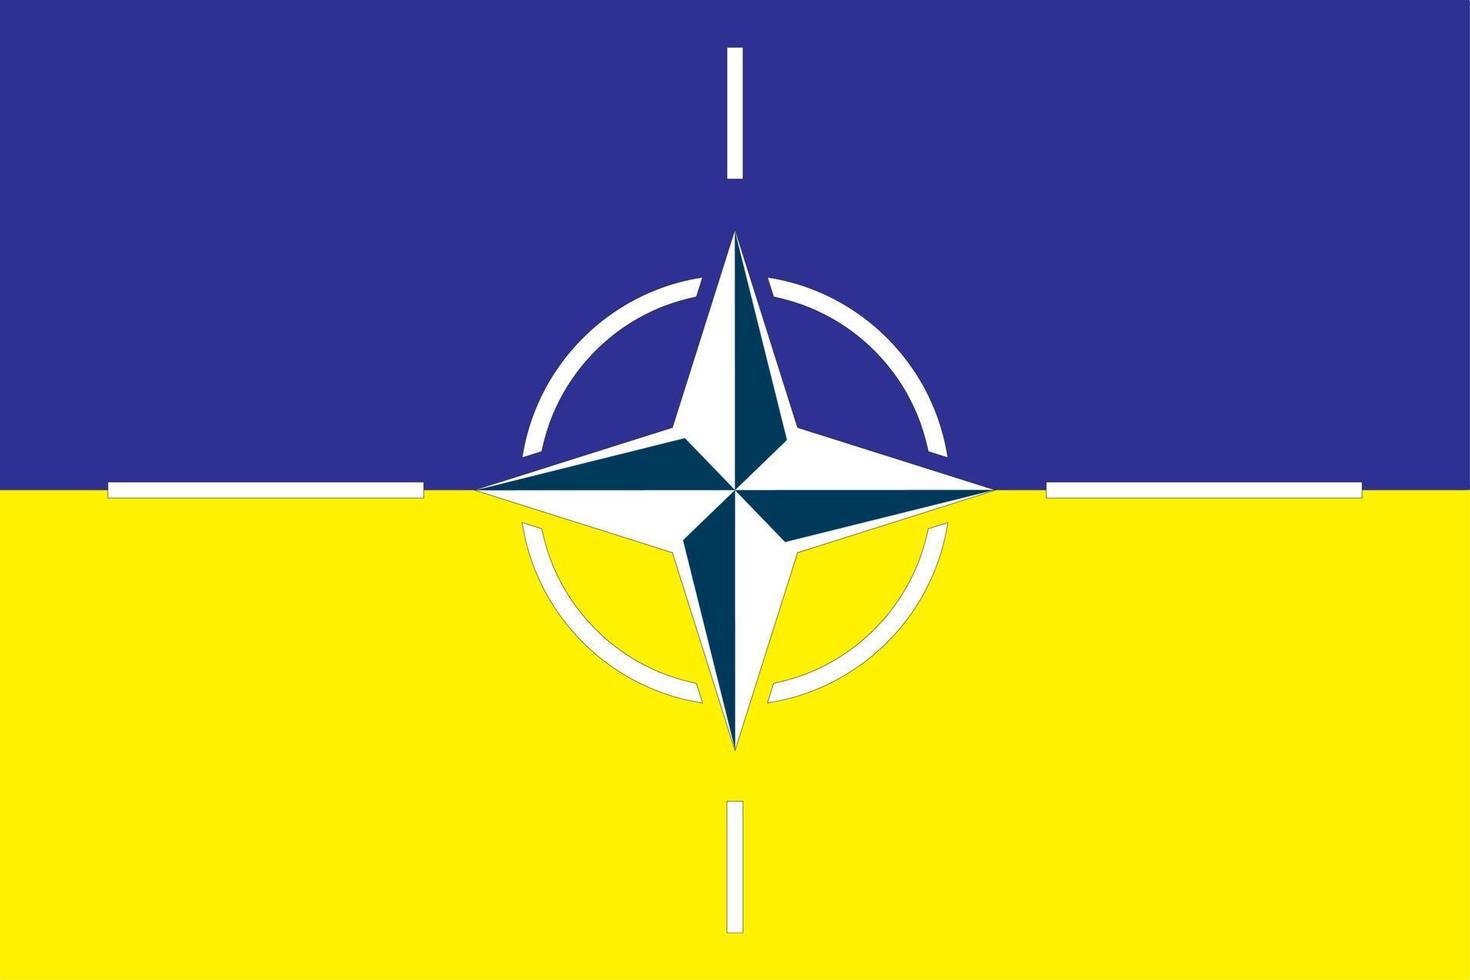 The flag of Ukraine against the background of the NATO flag. Ukraine and the concept of NATO. Vector illustration.